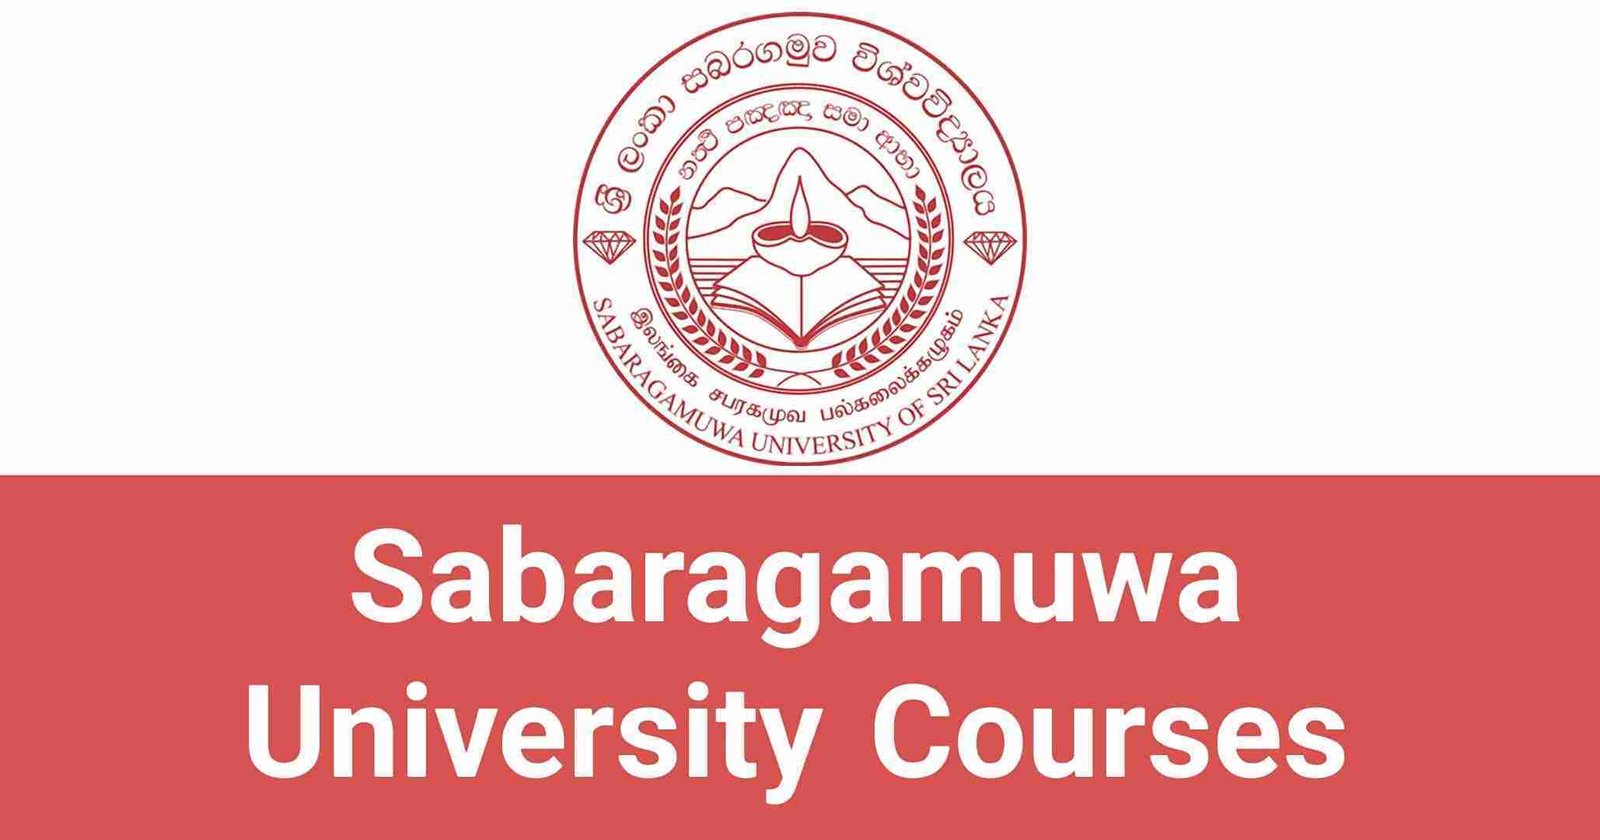 Sabaragamuwa University Courses